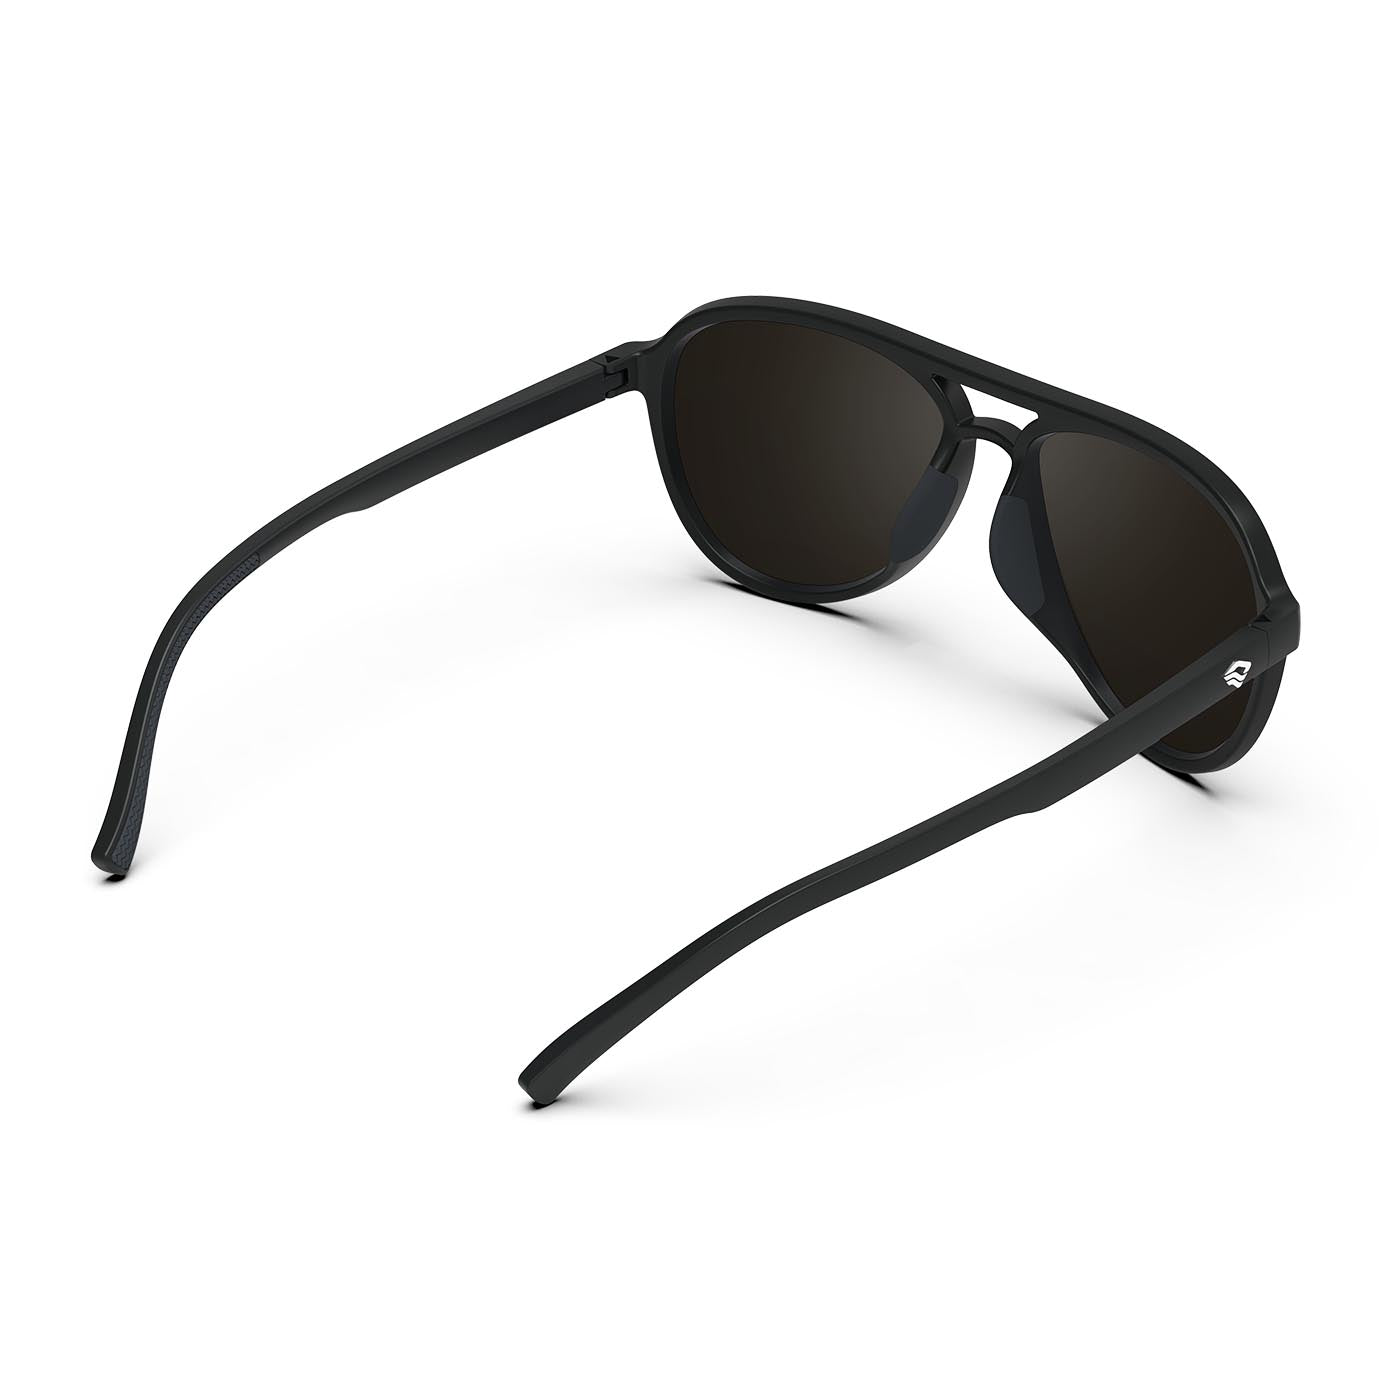 Torege ‘Blue Ridge’ Polarized Aviator Sunglasses - Lifetime Warranty - Men & Women Sports Glasses for Fishing, Boating, Beach, Golf, & Driving